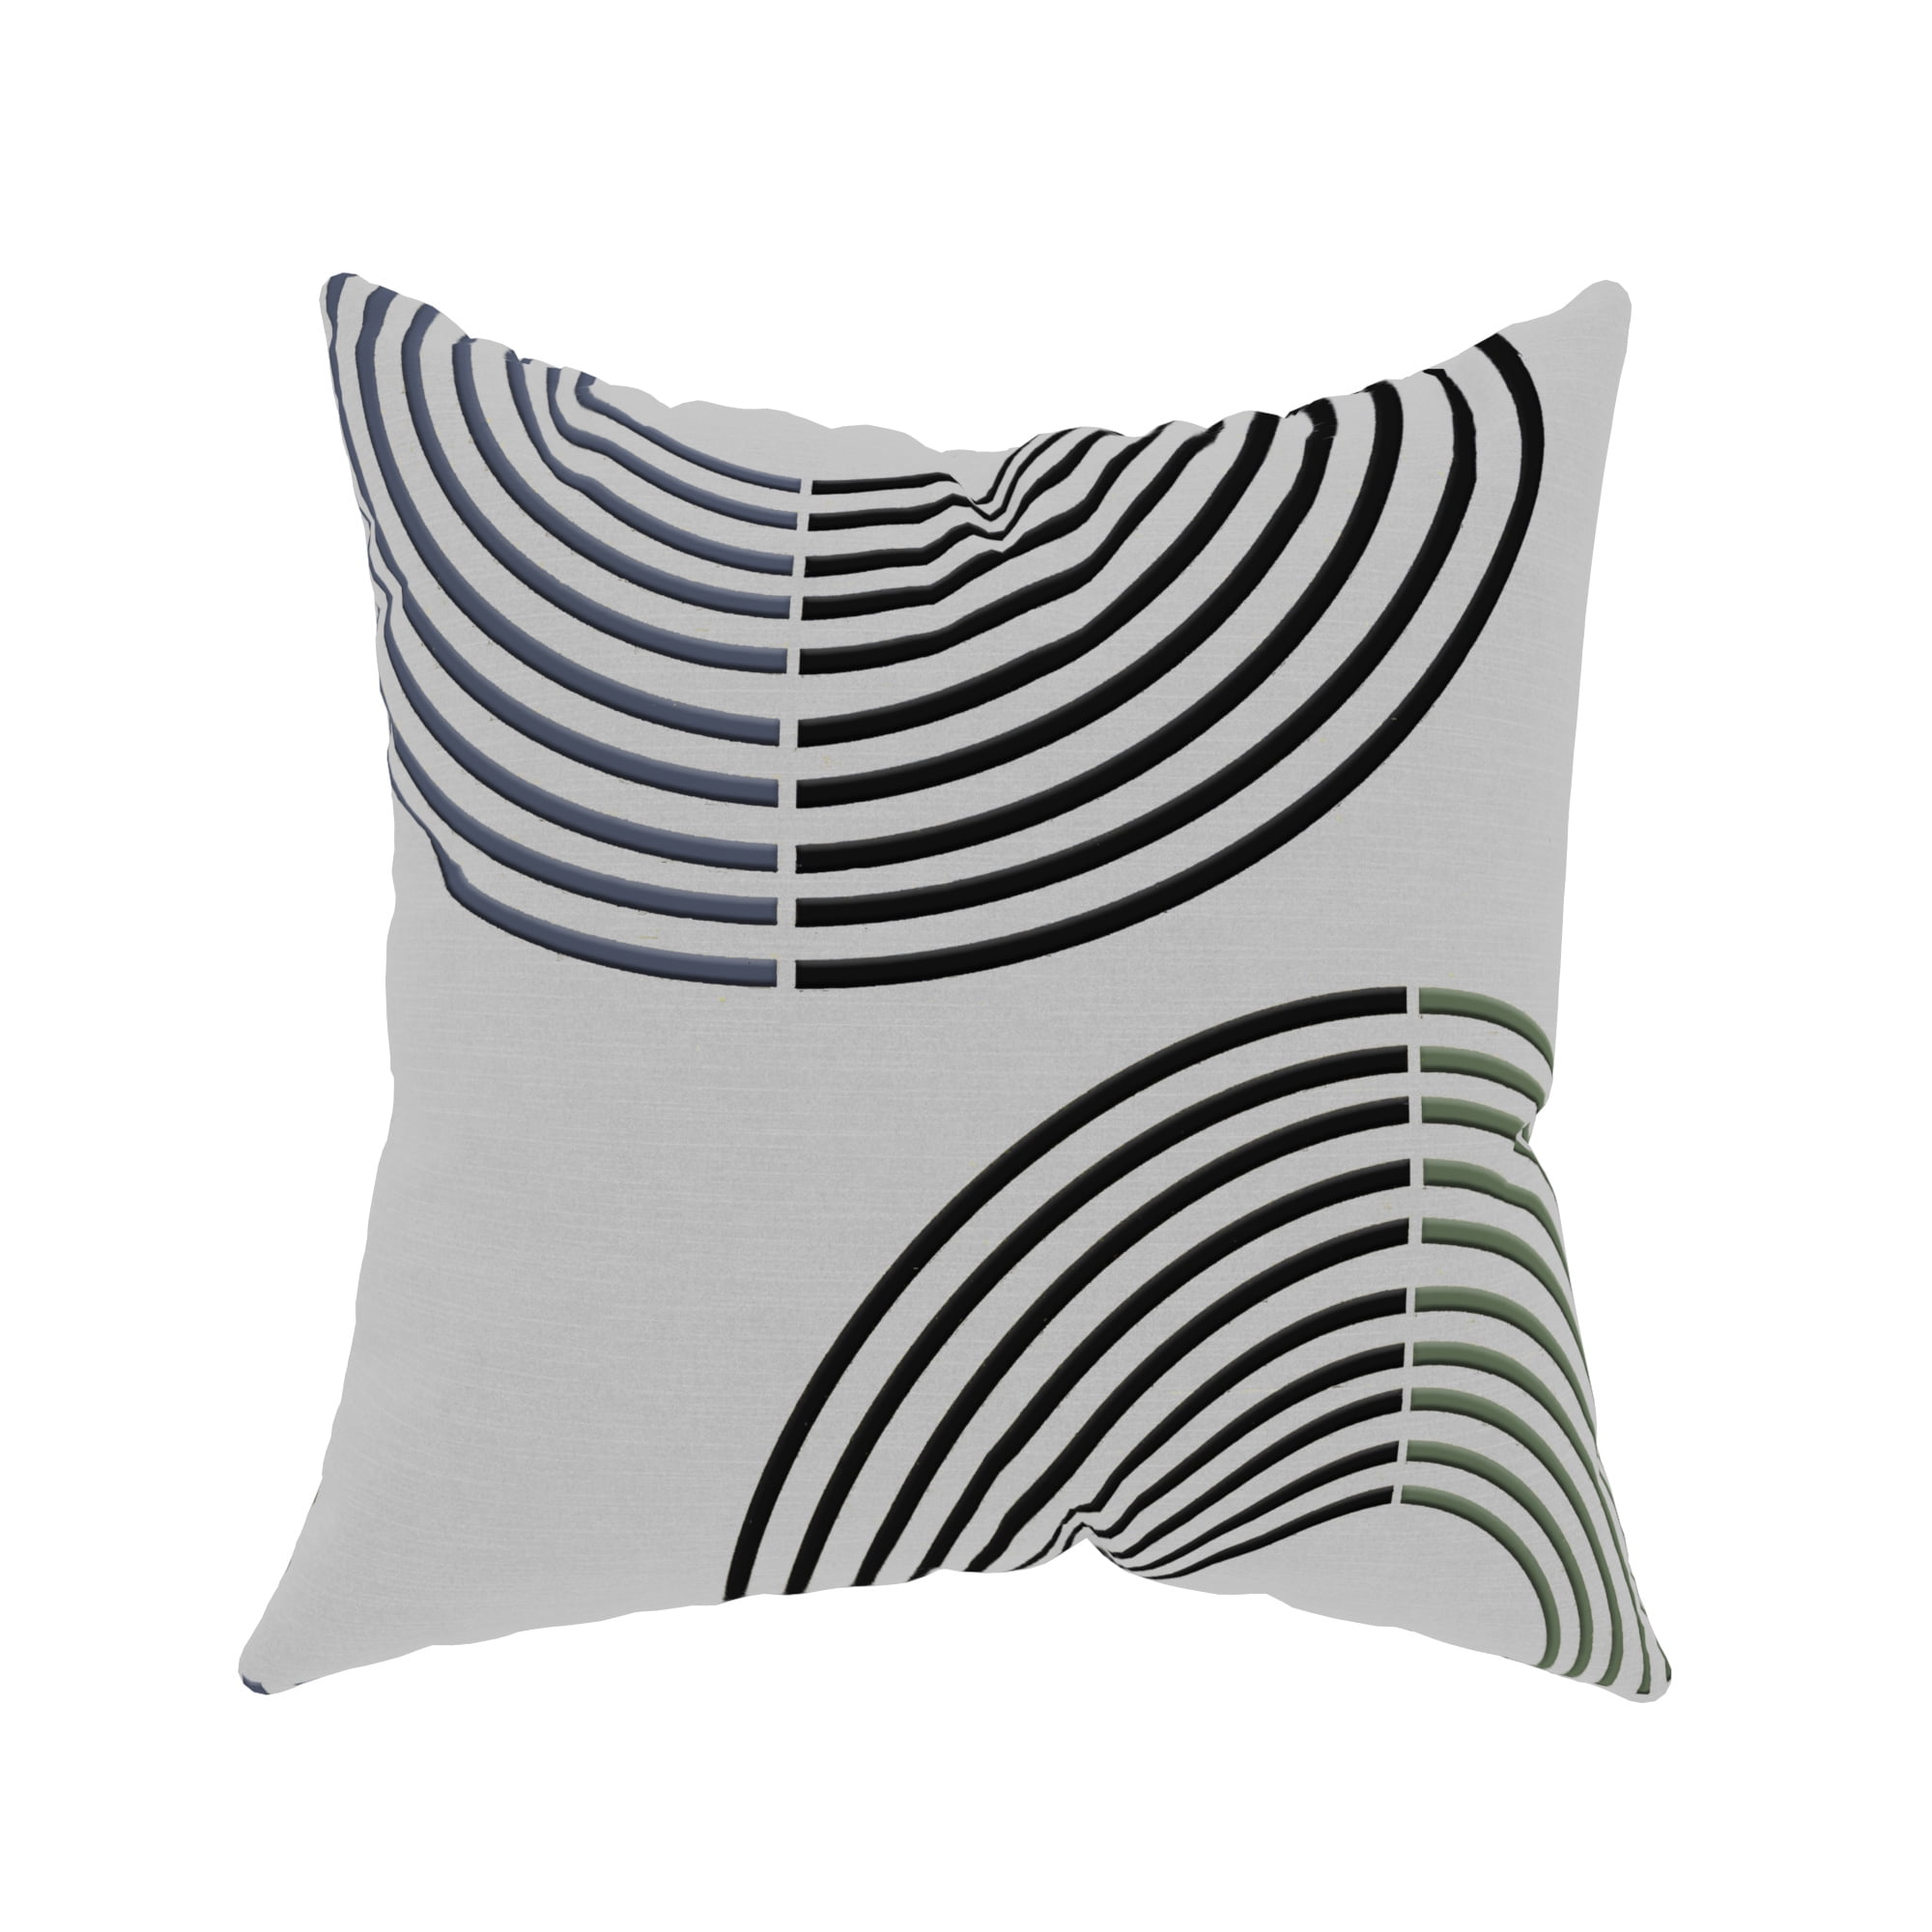 Simple round grass Cotton Linen Throw Pillow Case Cushion Cover Home Decor 18" 